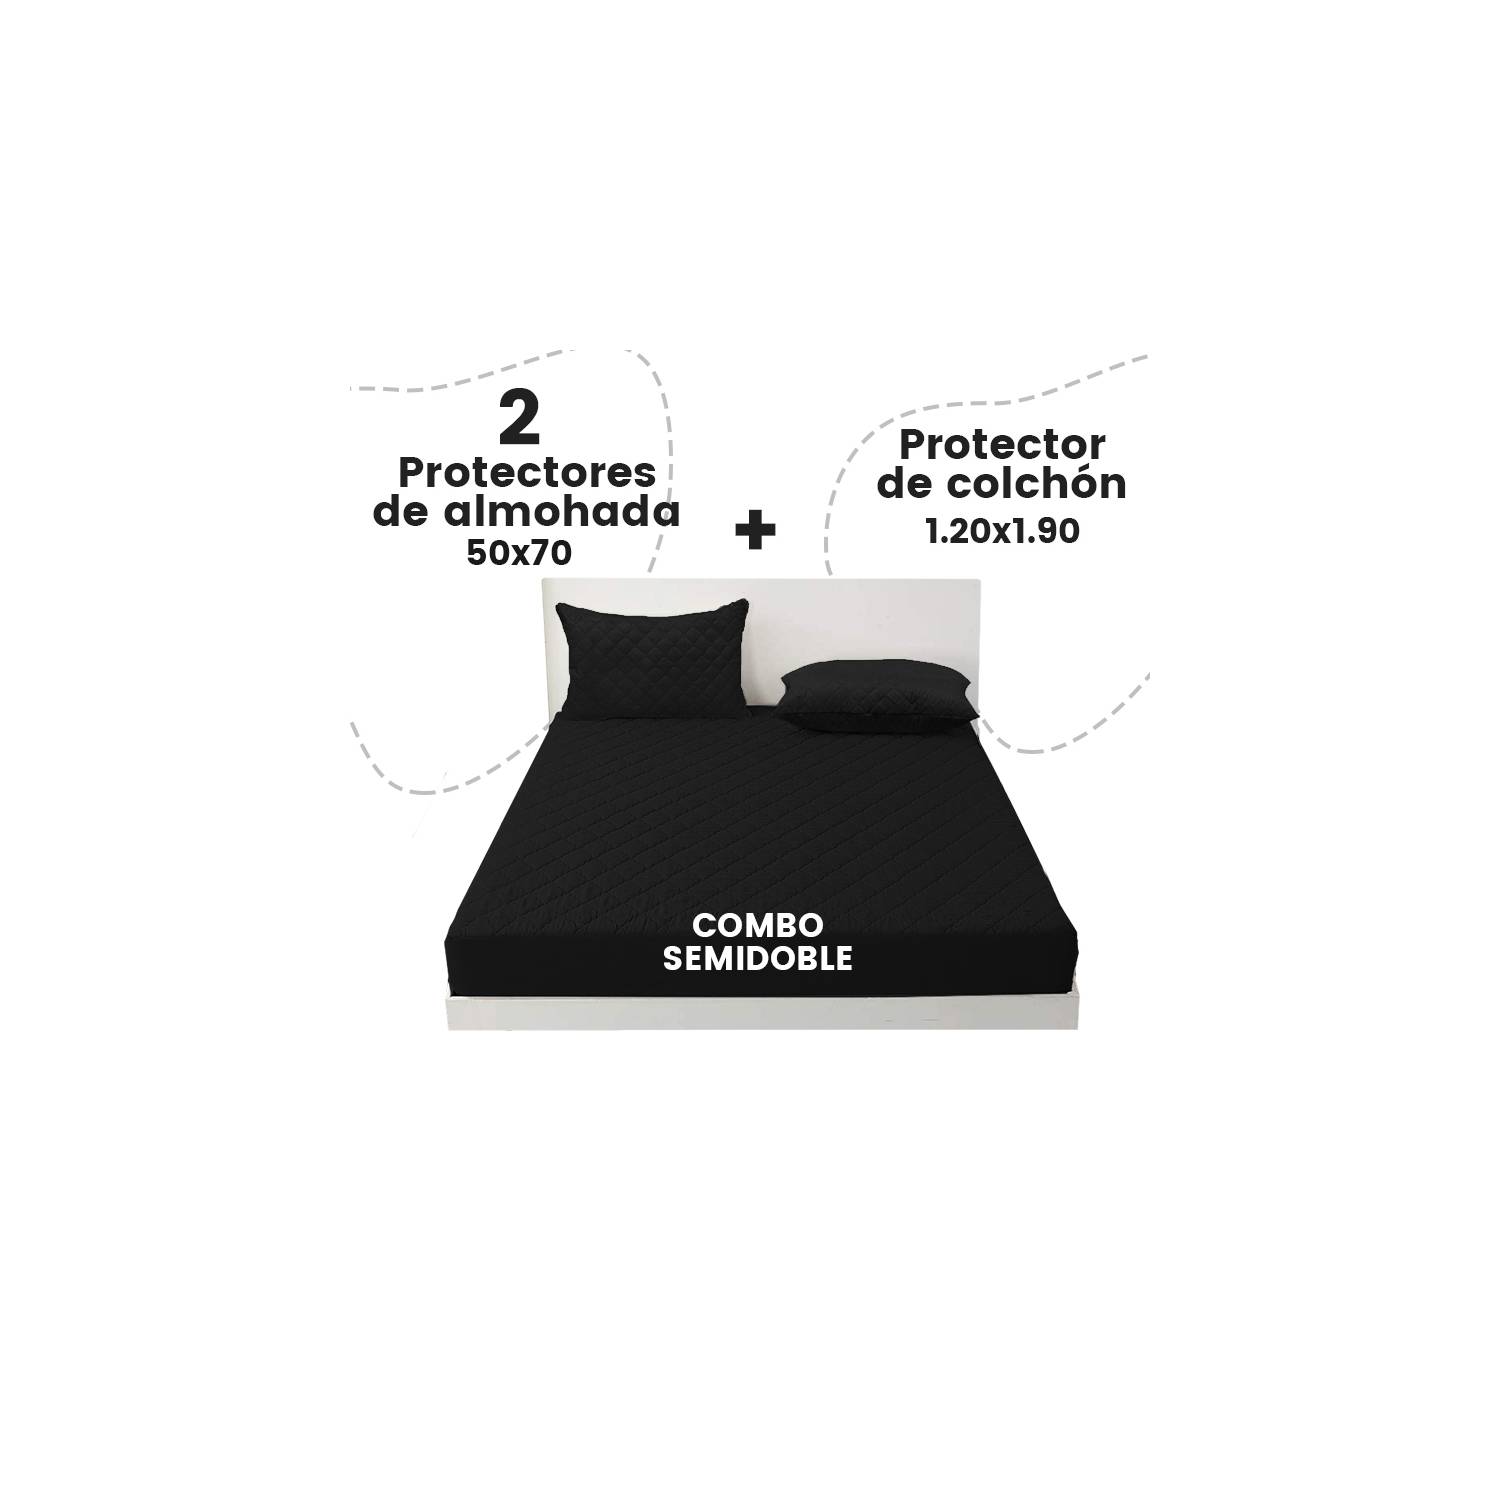 Protector Colchon Impermeable/antifluido Semidoble 1.20x1.90